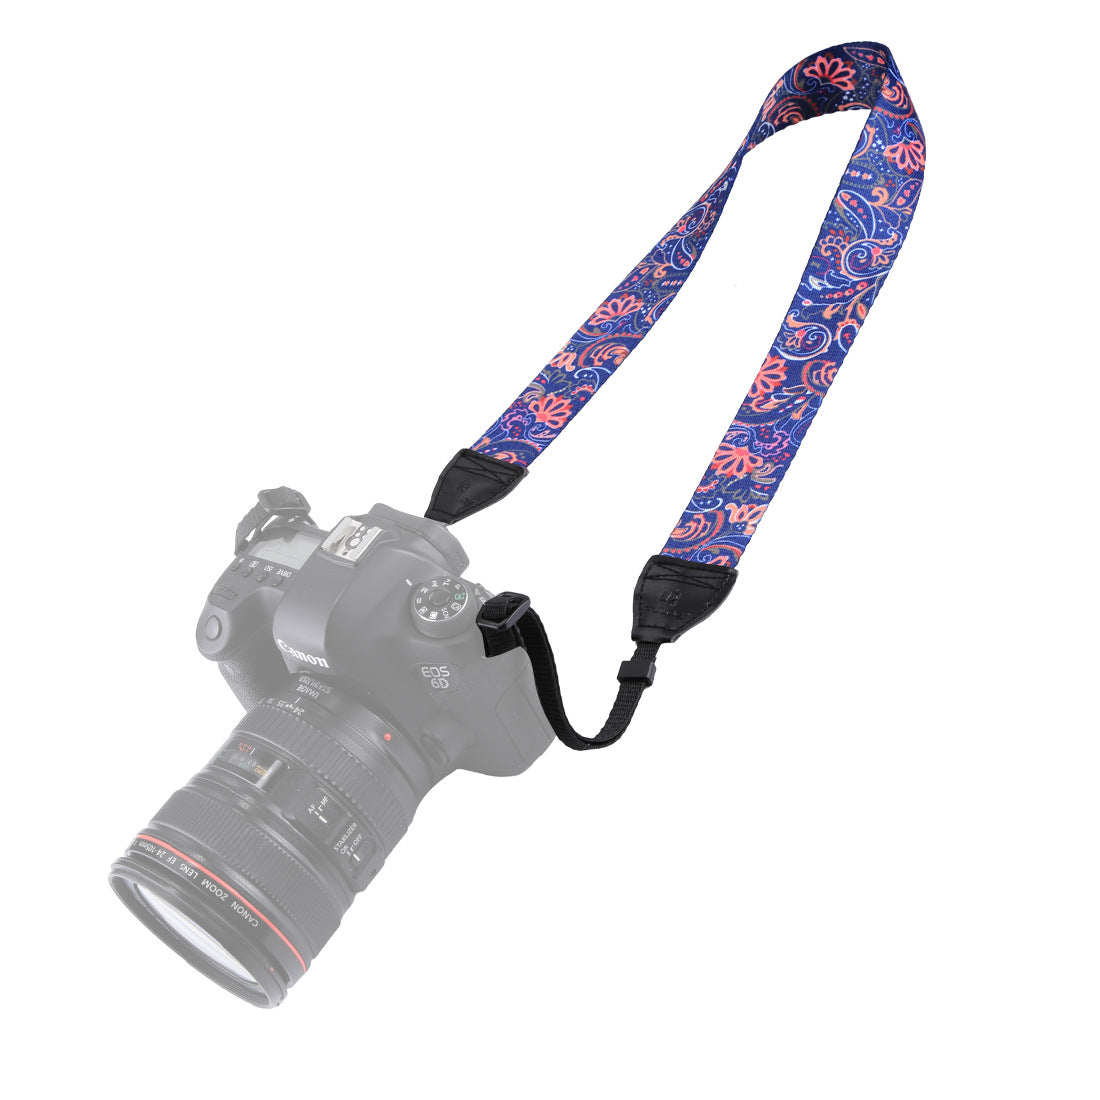 Avezano Retro Ethnic Style Multi-color Series Butterflies Shoulder Neck Strap Camera Strap for SLR / DSLR Cameras